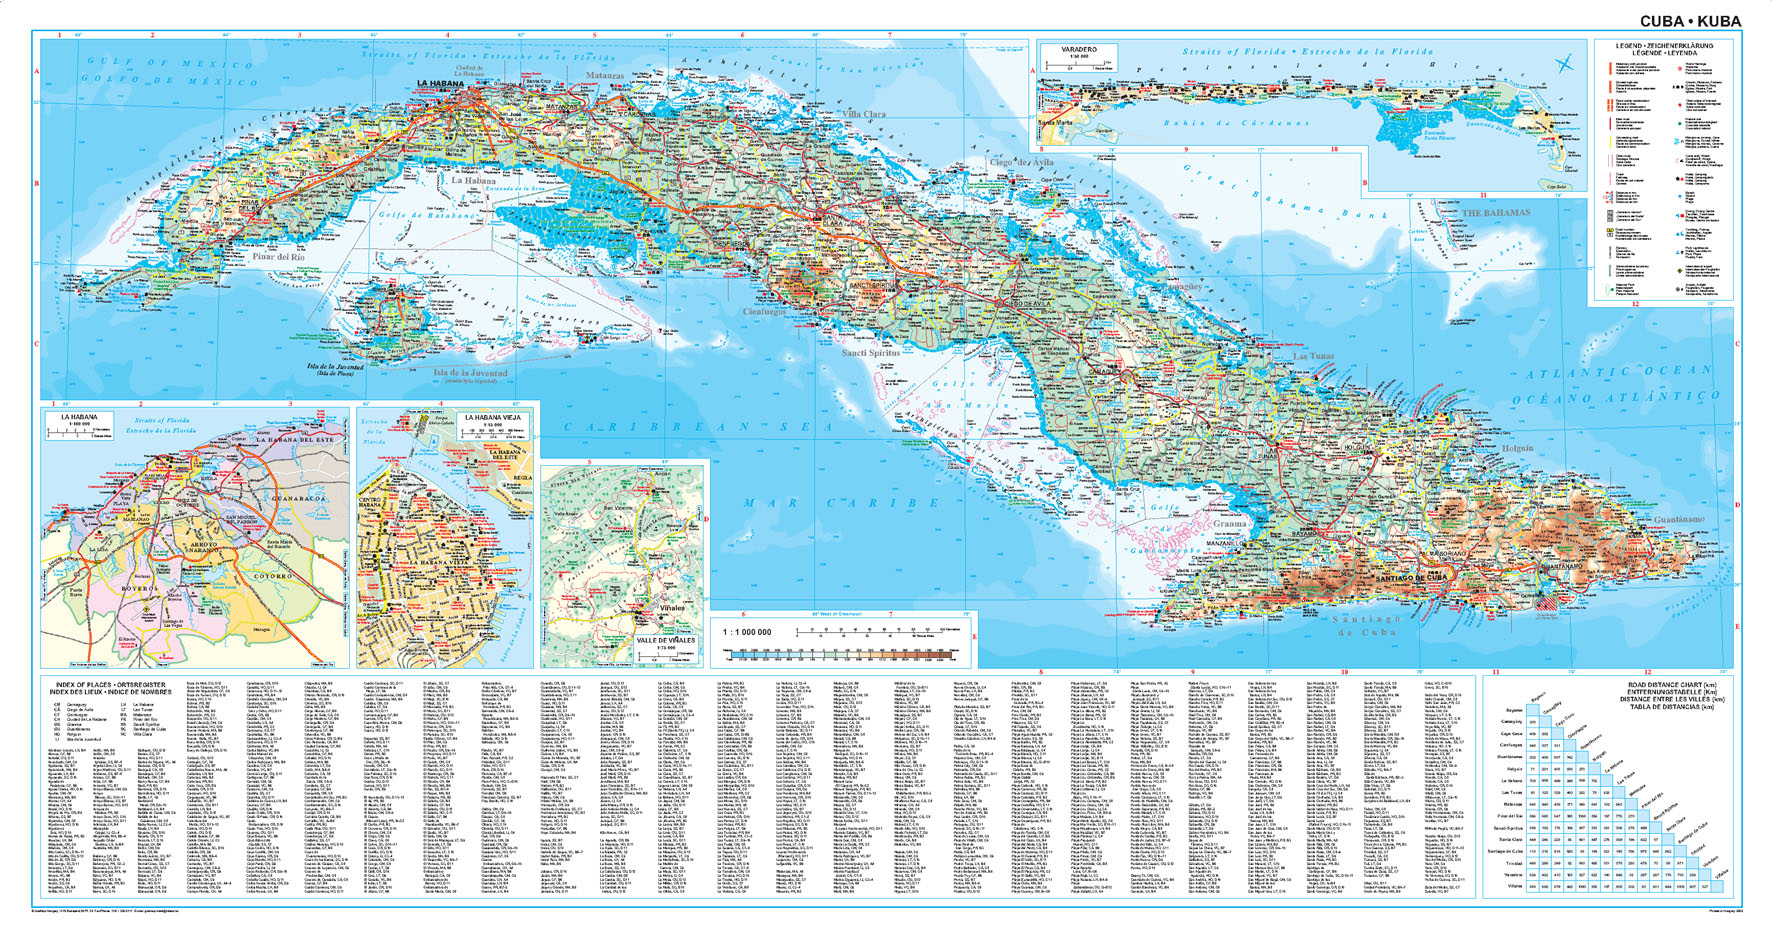 Cuba overview map